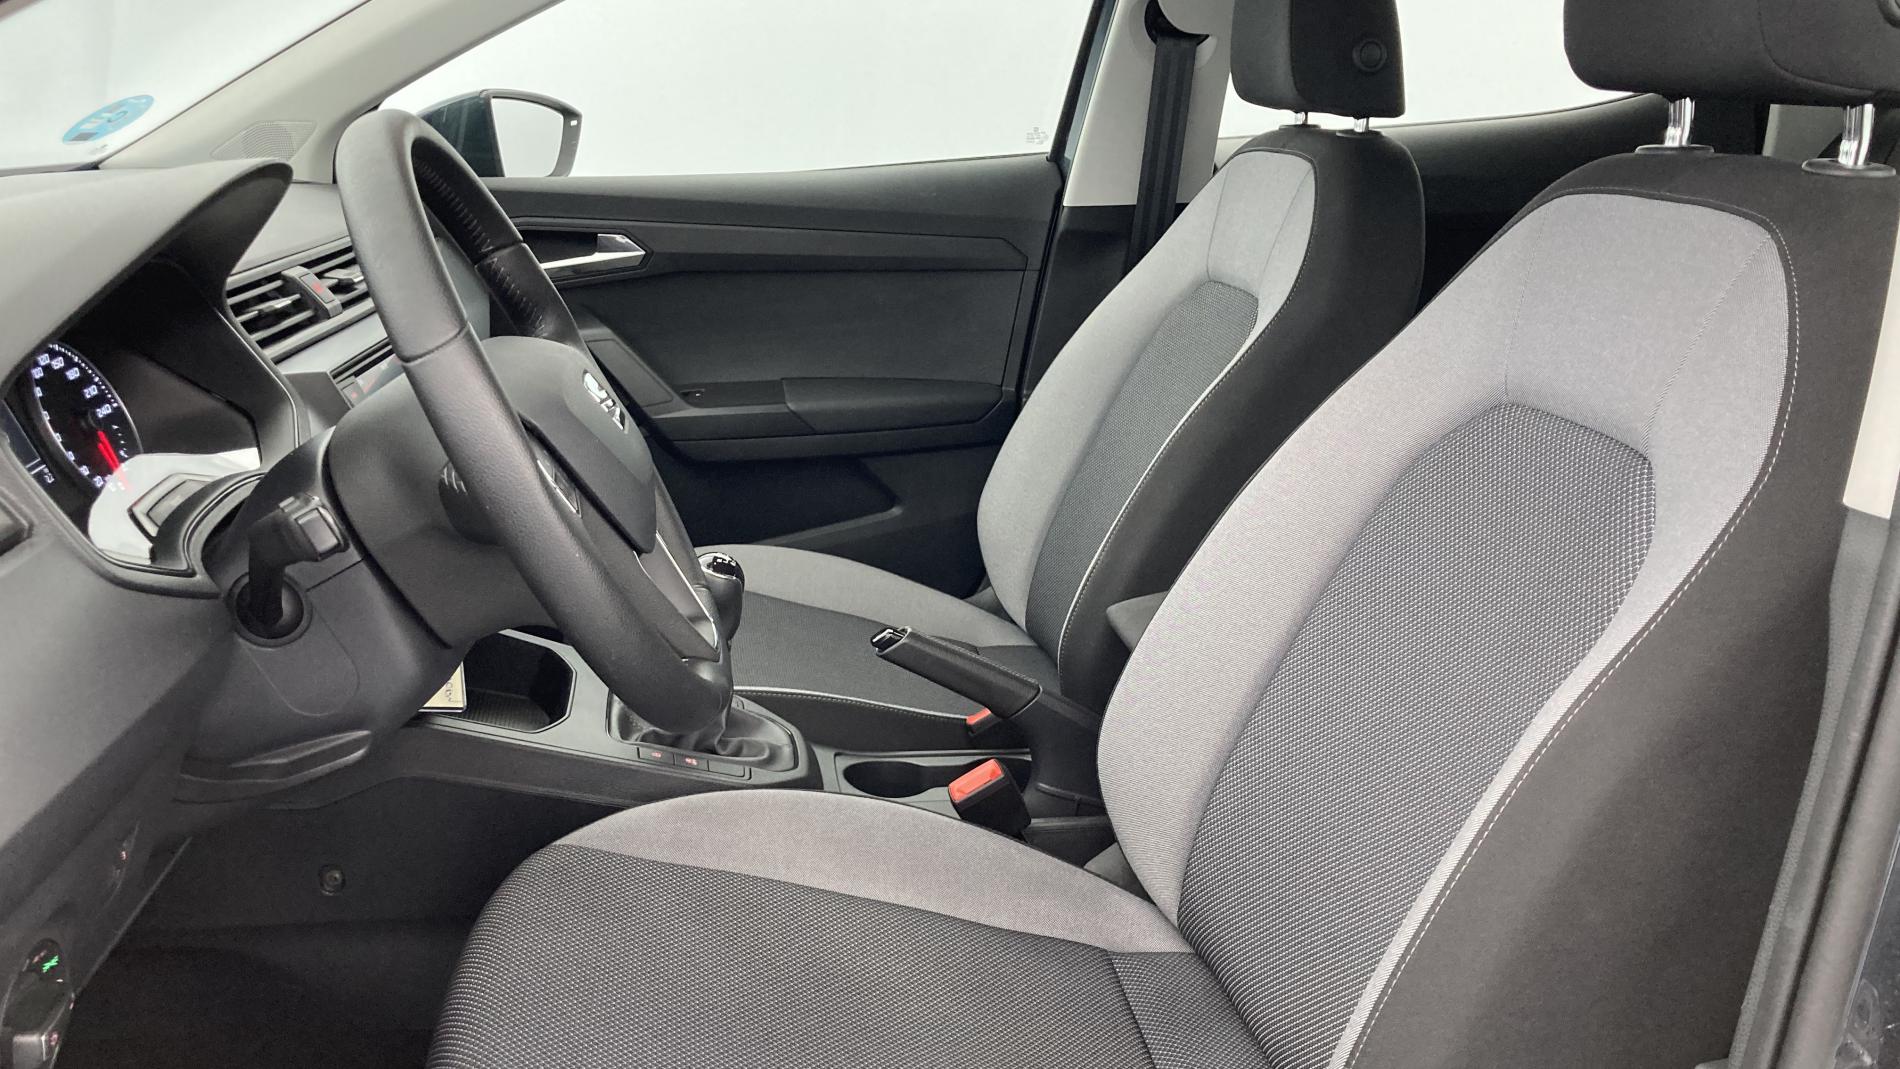 seat ibiza style 1.0 MPI 80 2019 gris magnetic 22